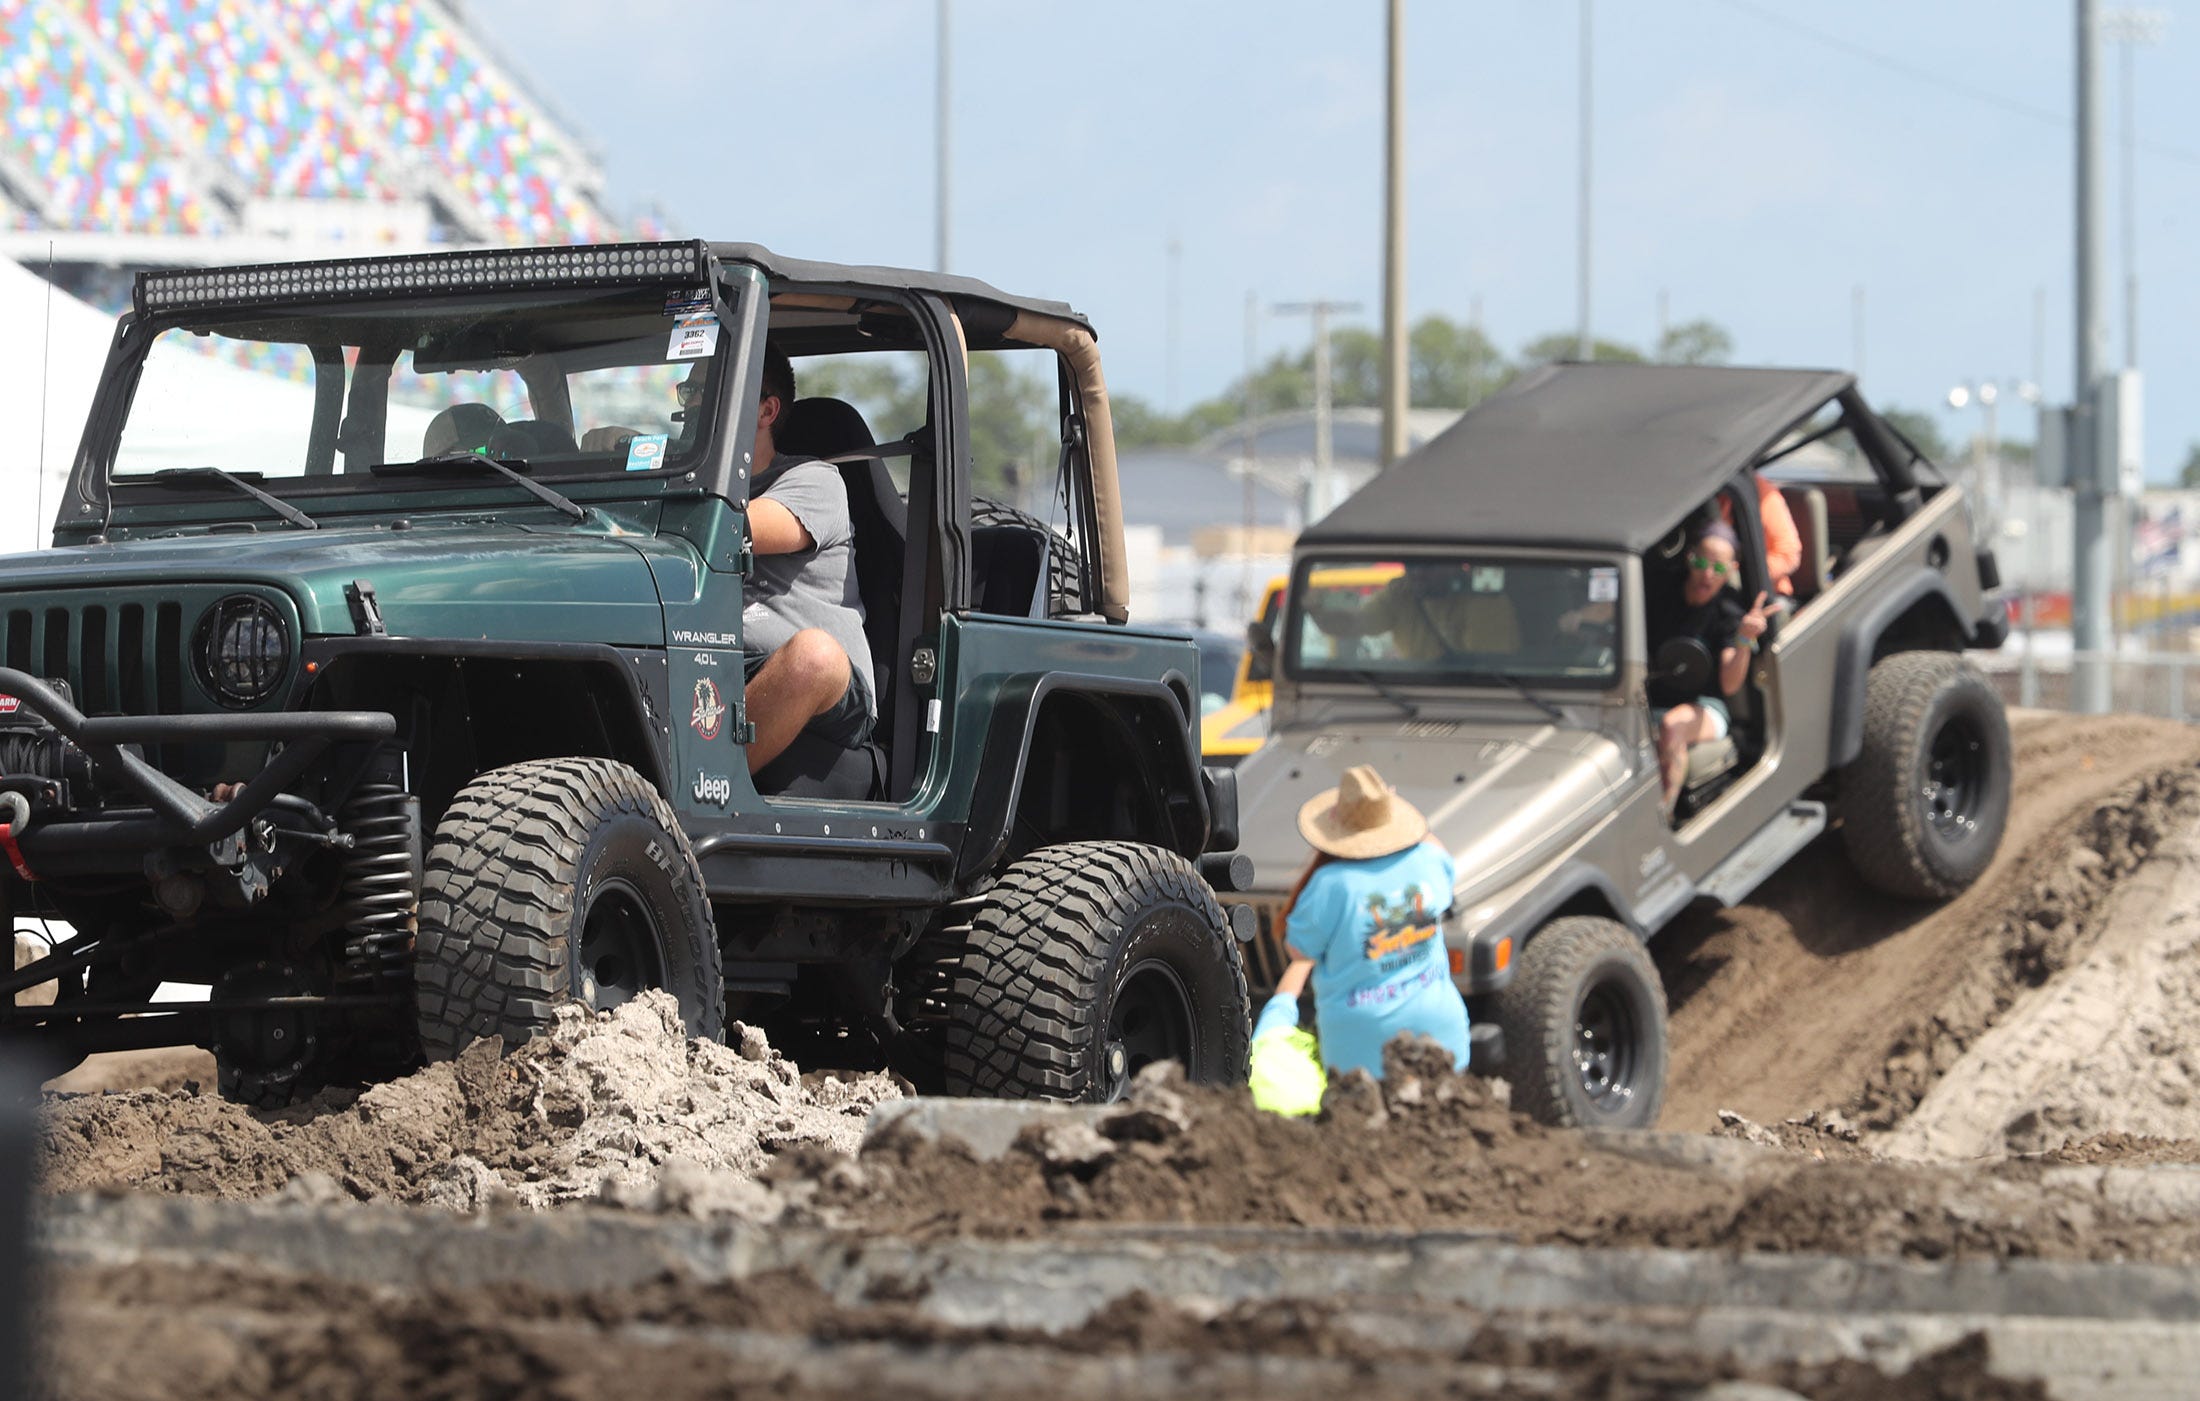 Jeep Beach 2022 Daytona Beach mustdo events